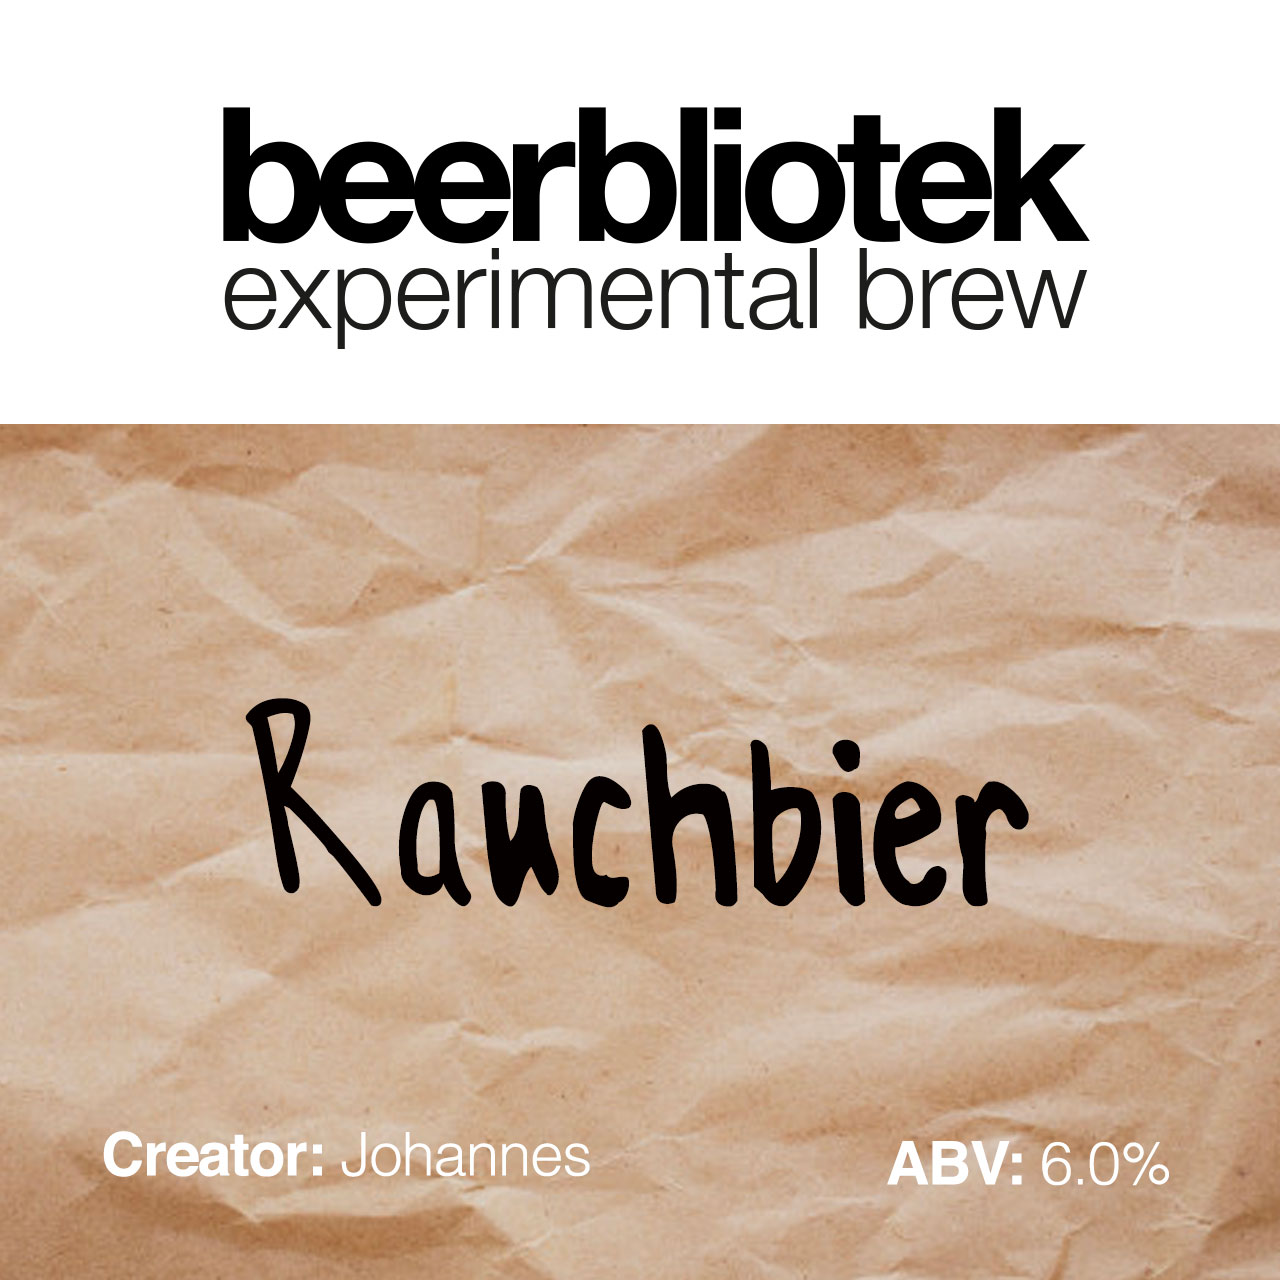 Johannes Blomqvist, Beerbliotek's latest intern, brewes a Rauchbier as part of a one-time, limited experimental brew by Beerbliotek, a Swedish Craft Brewery Gothenburg, Sweden.